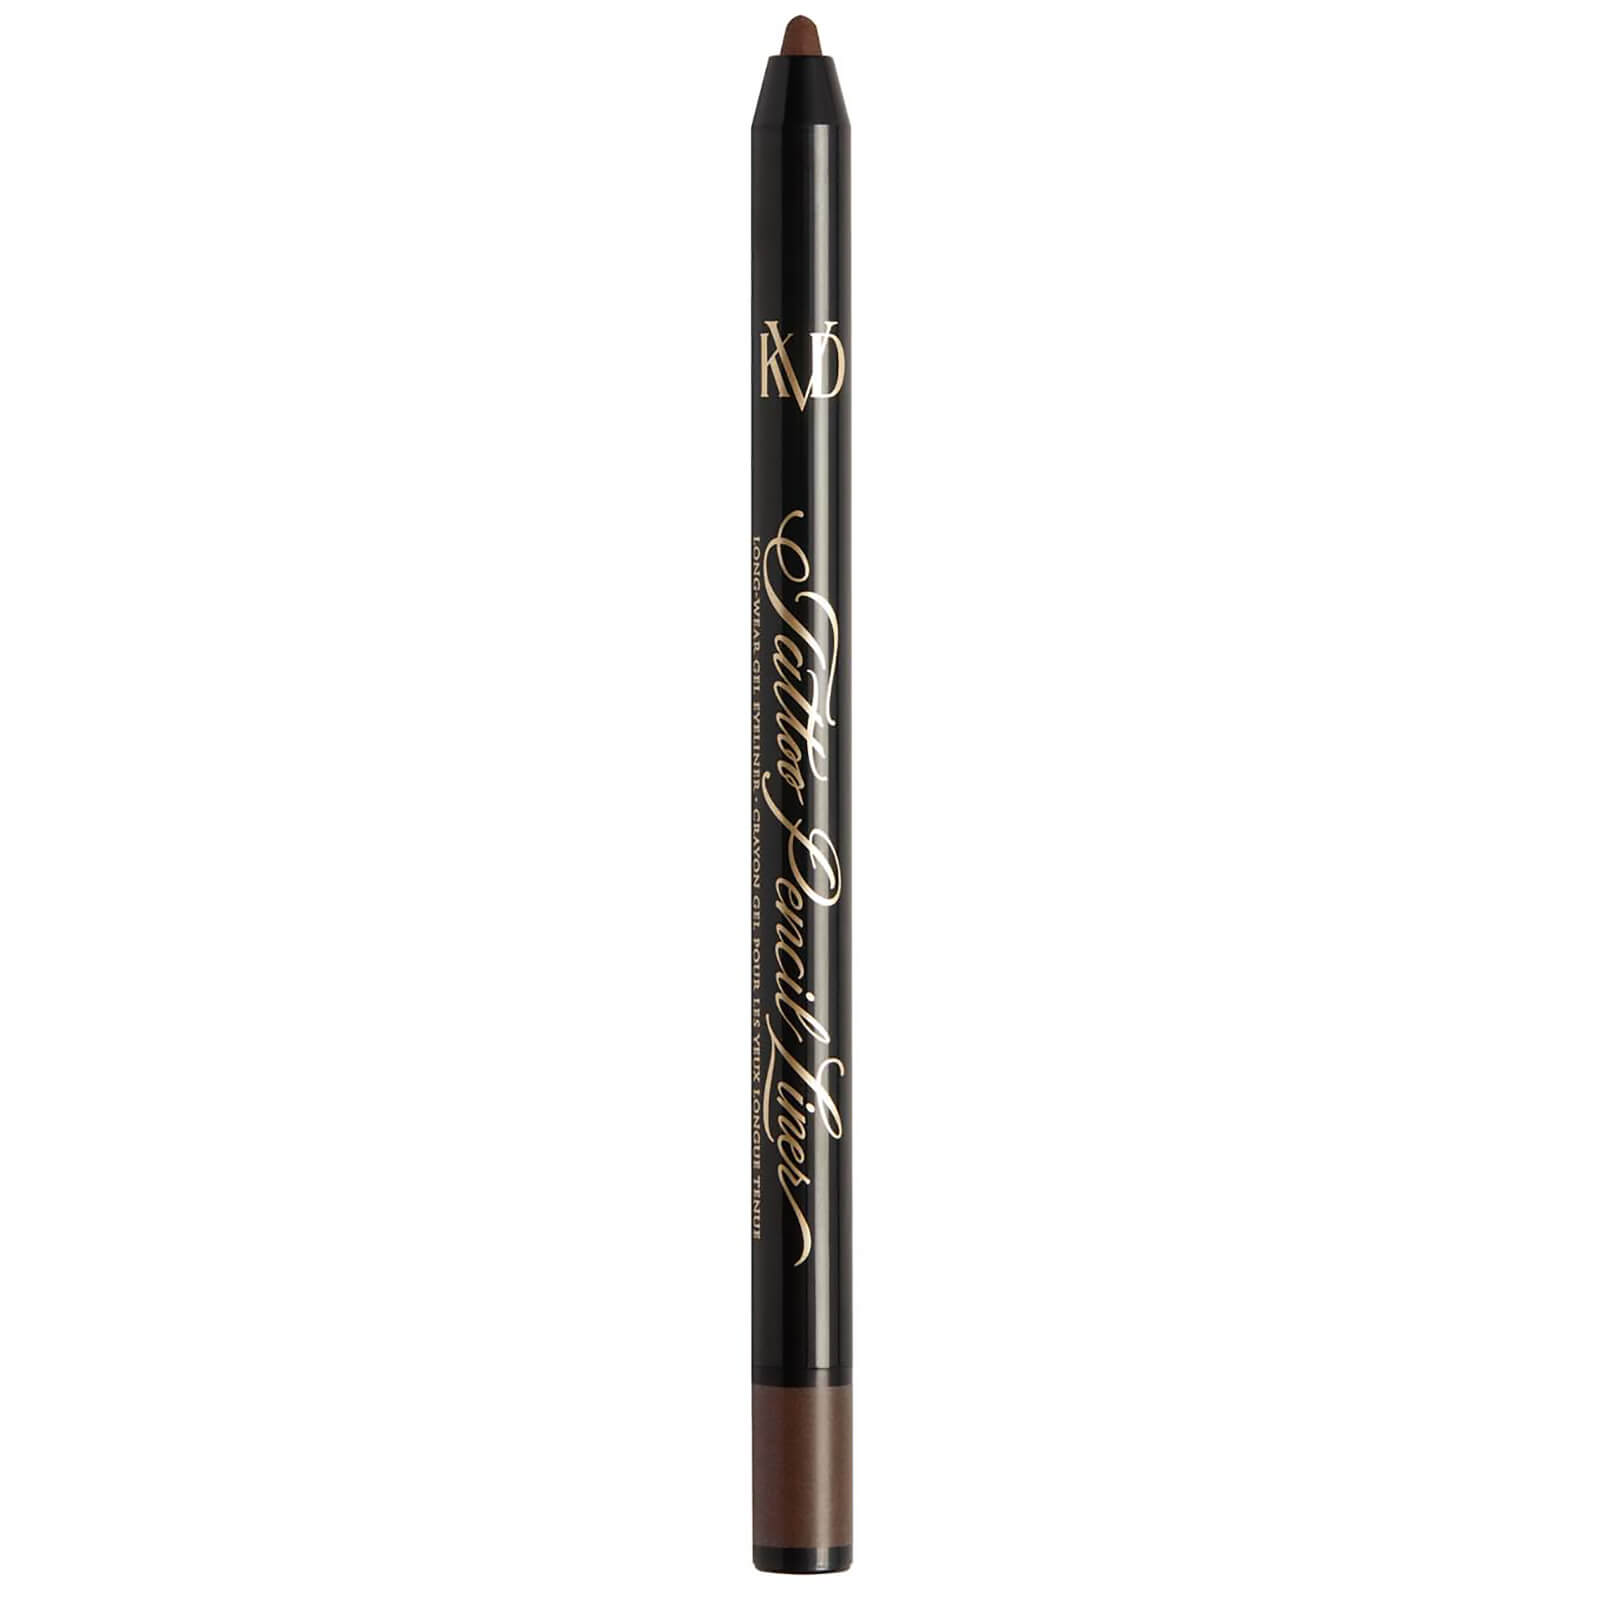 KVD Beauty Tattoo Pencil Liner Long-Wear Gel Eyeliner 0.5g (Various Shades) - Tigereye Brown 45